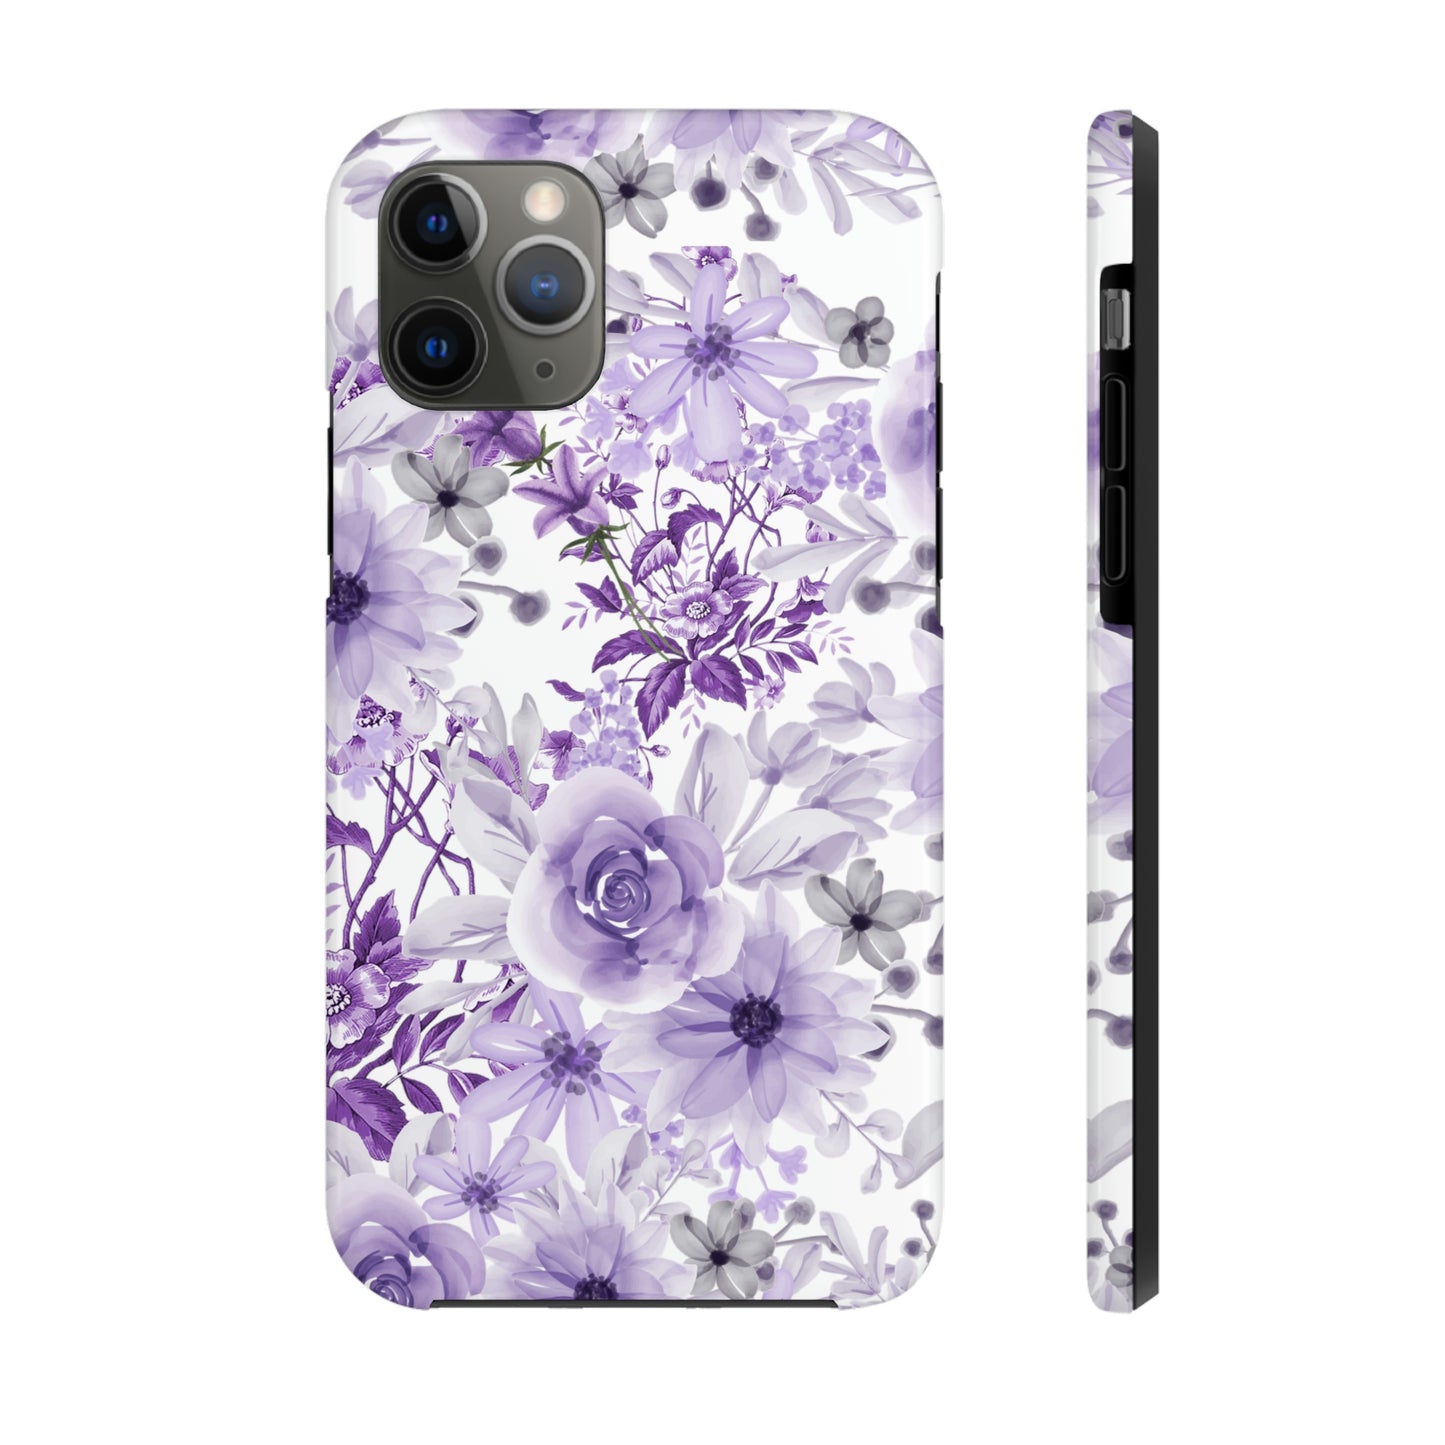 Purple IPhone Case / Floral Iphone Case